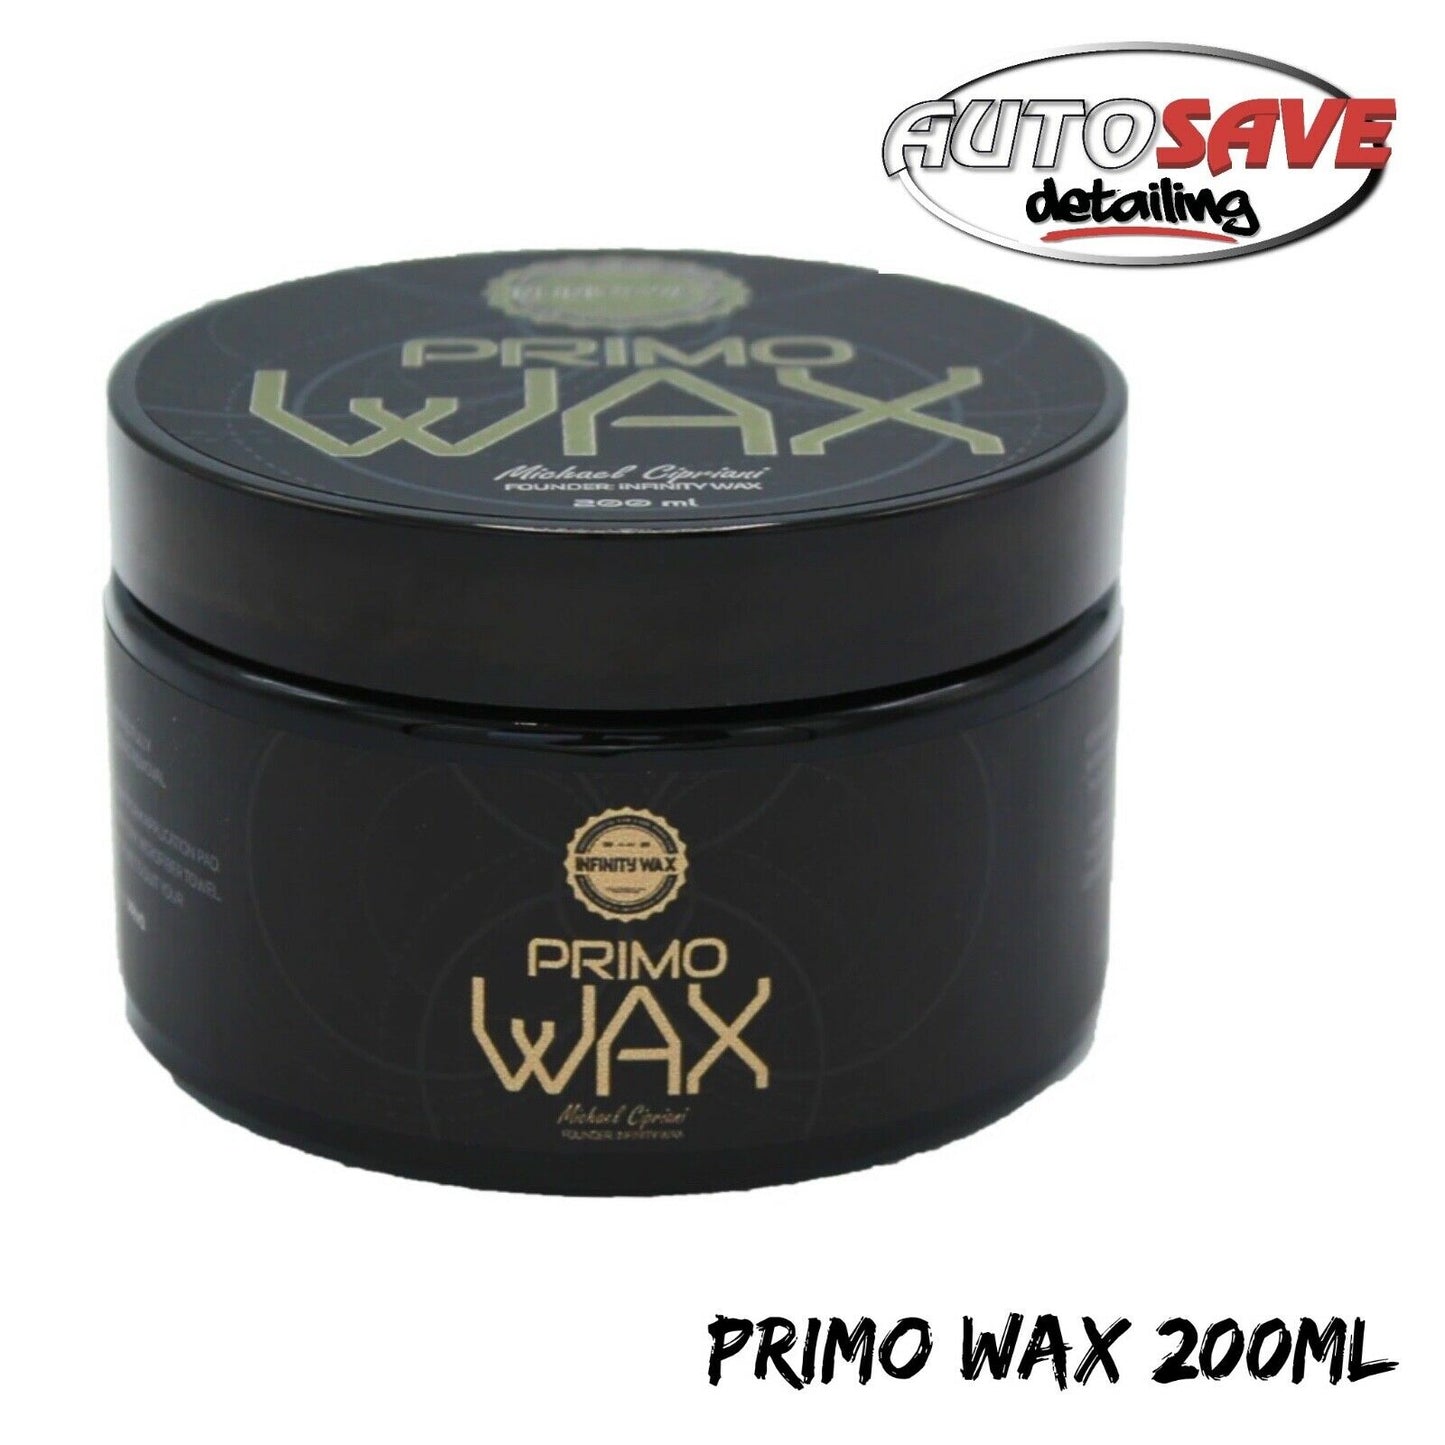 Infinity Wax Primo Wax